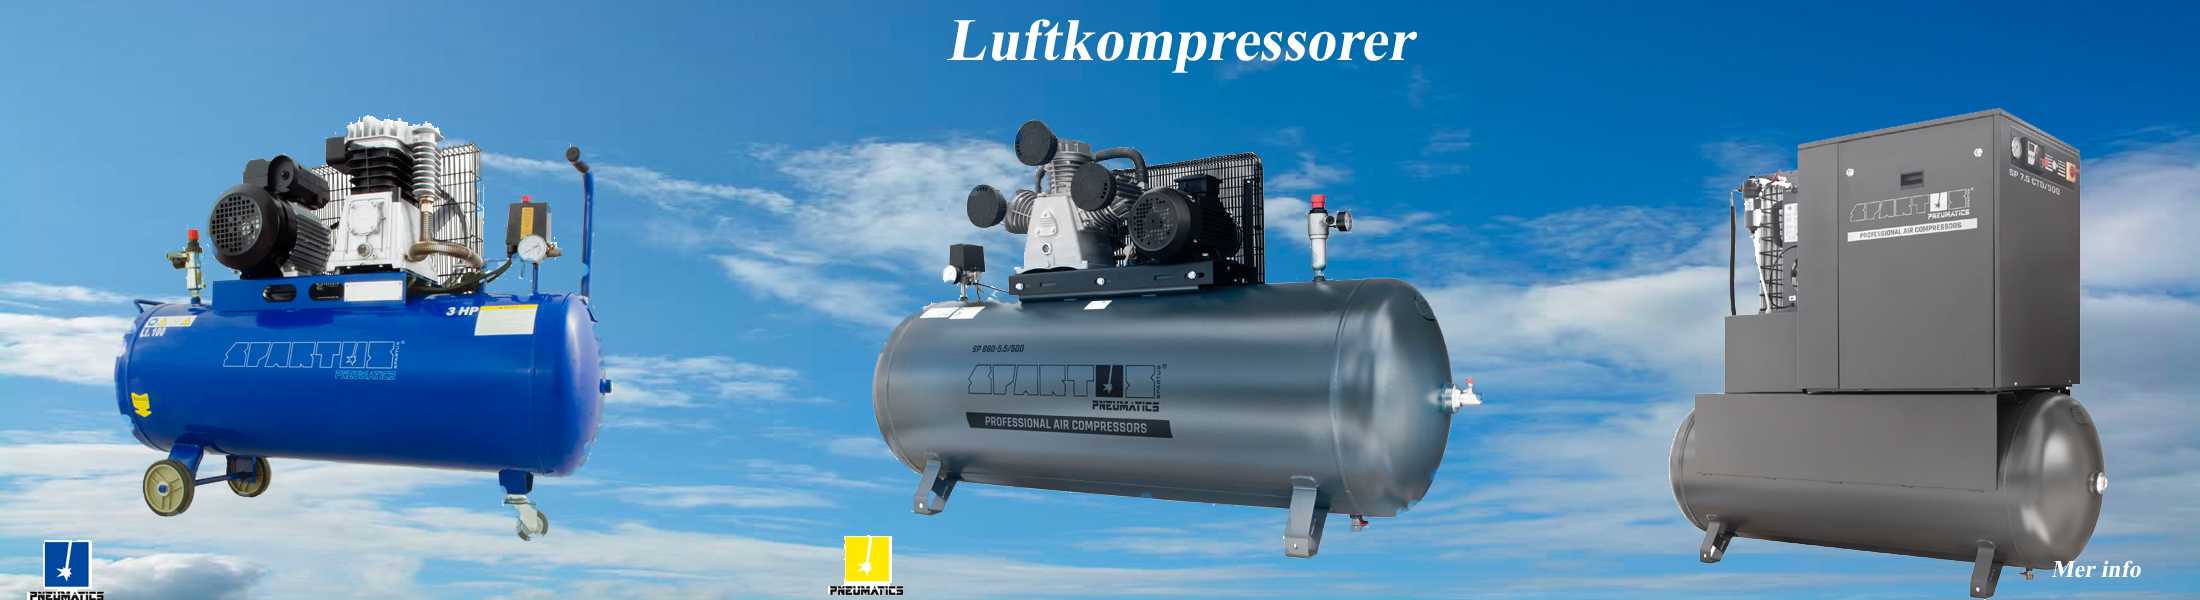 Luftkompressorer